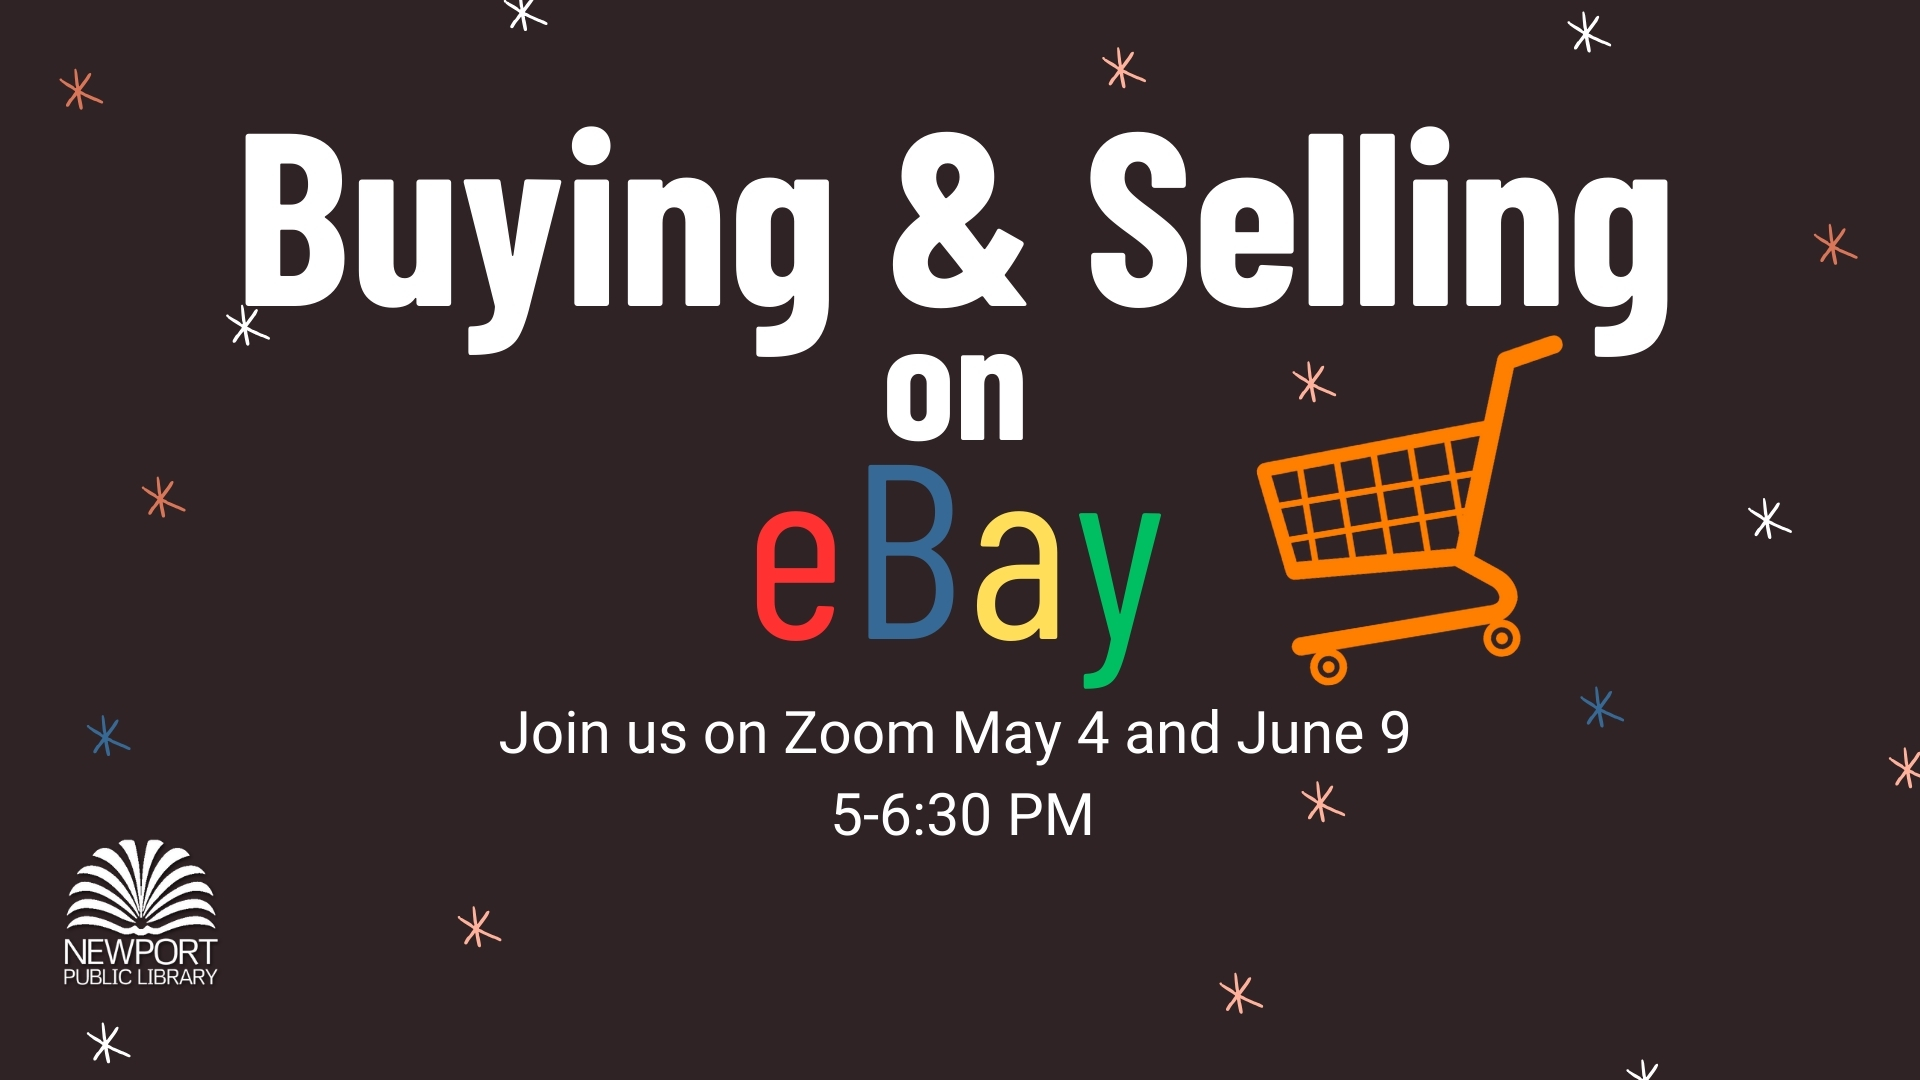 Buying & Selling on eBay